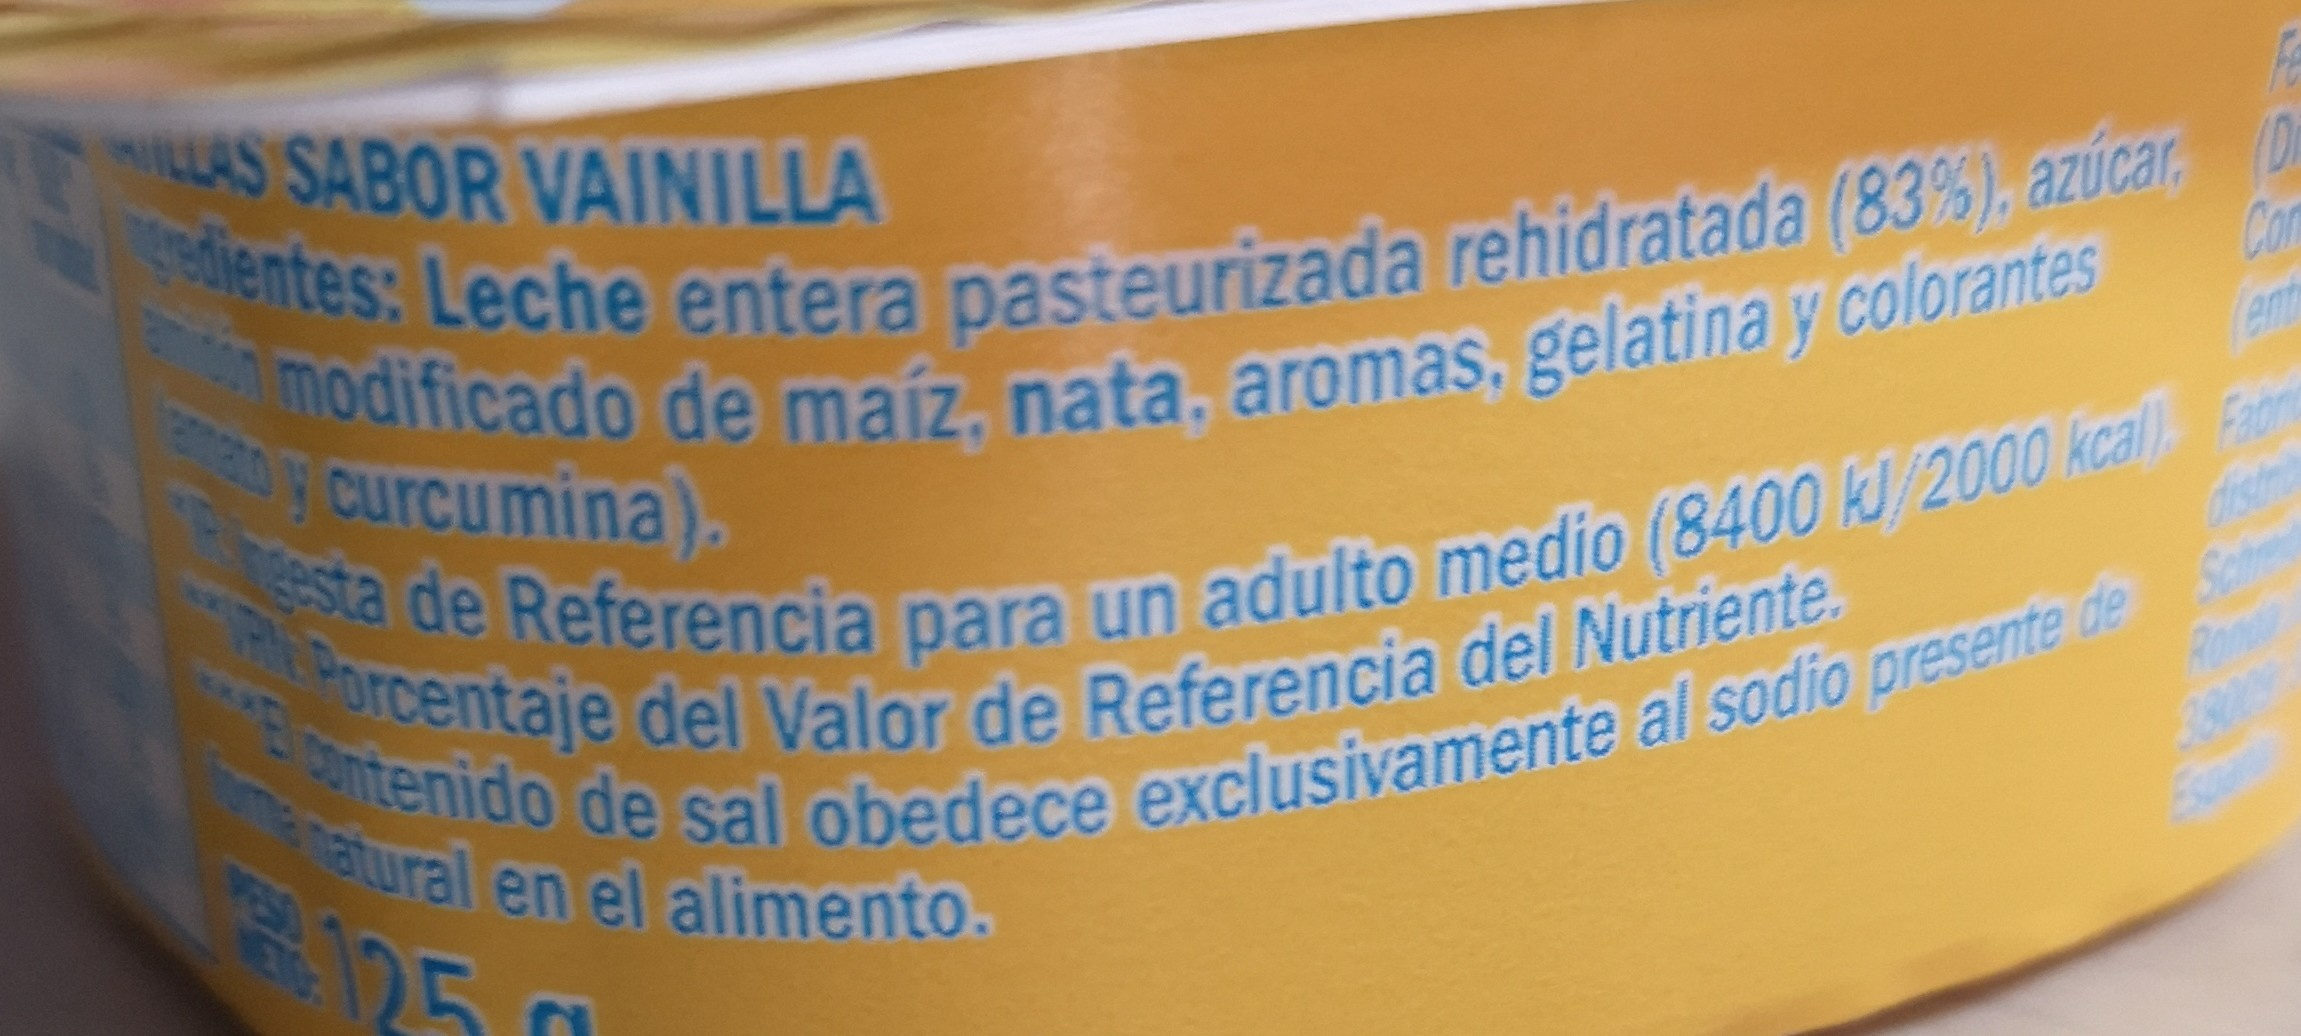 Natillas - Ingredientes